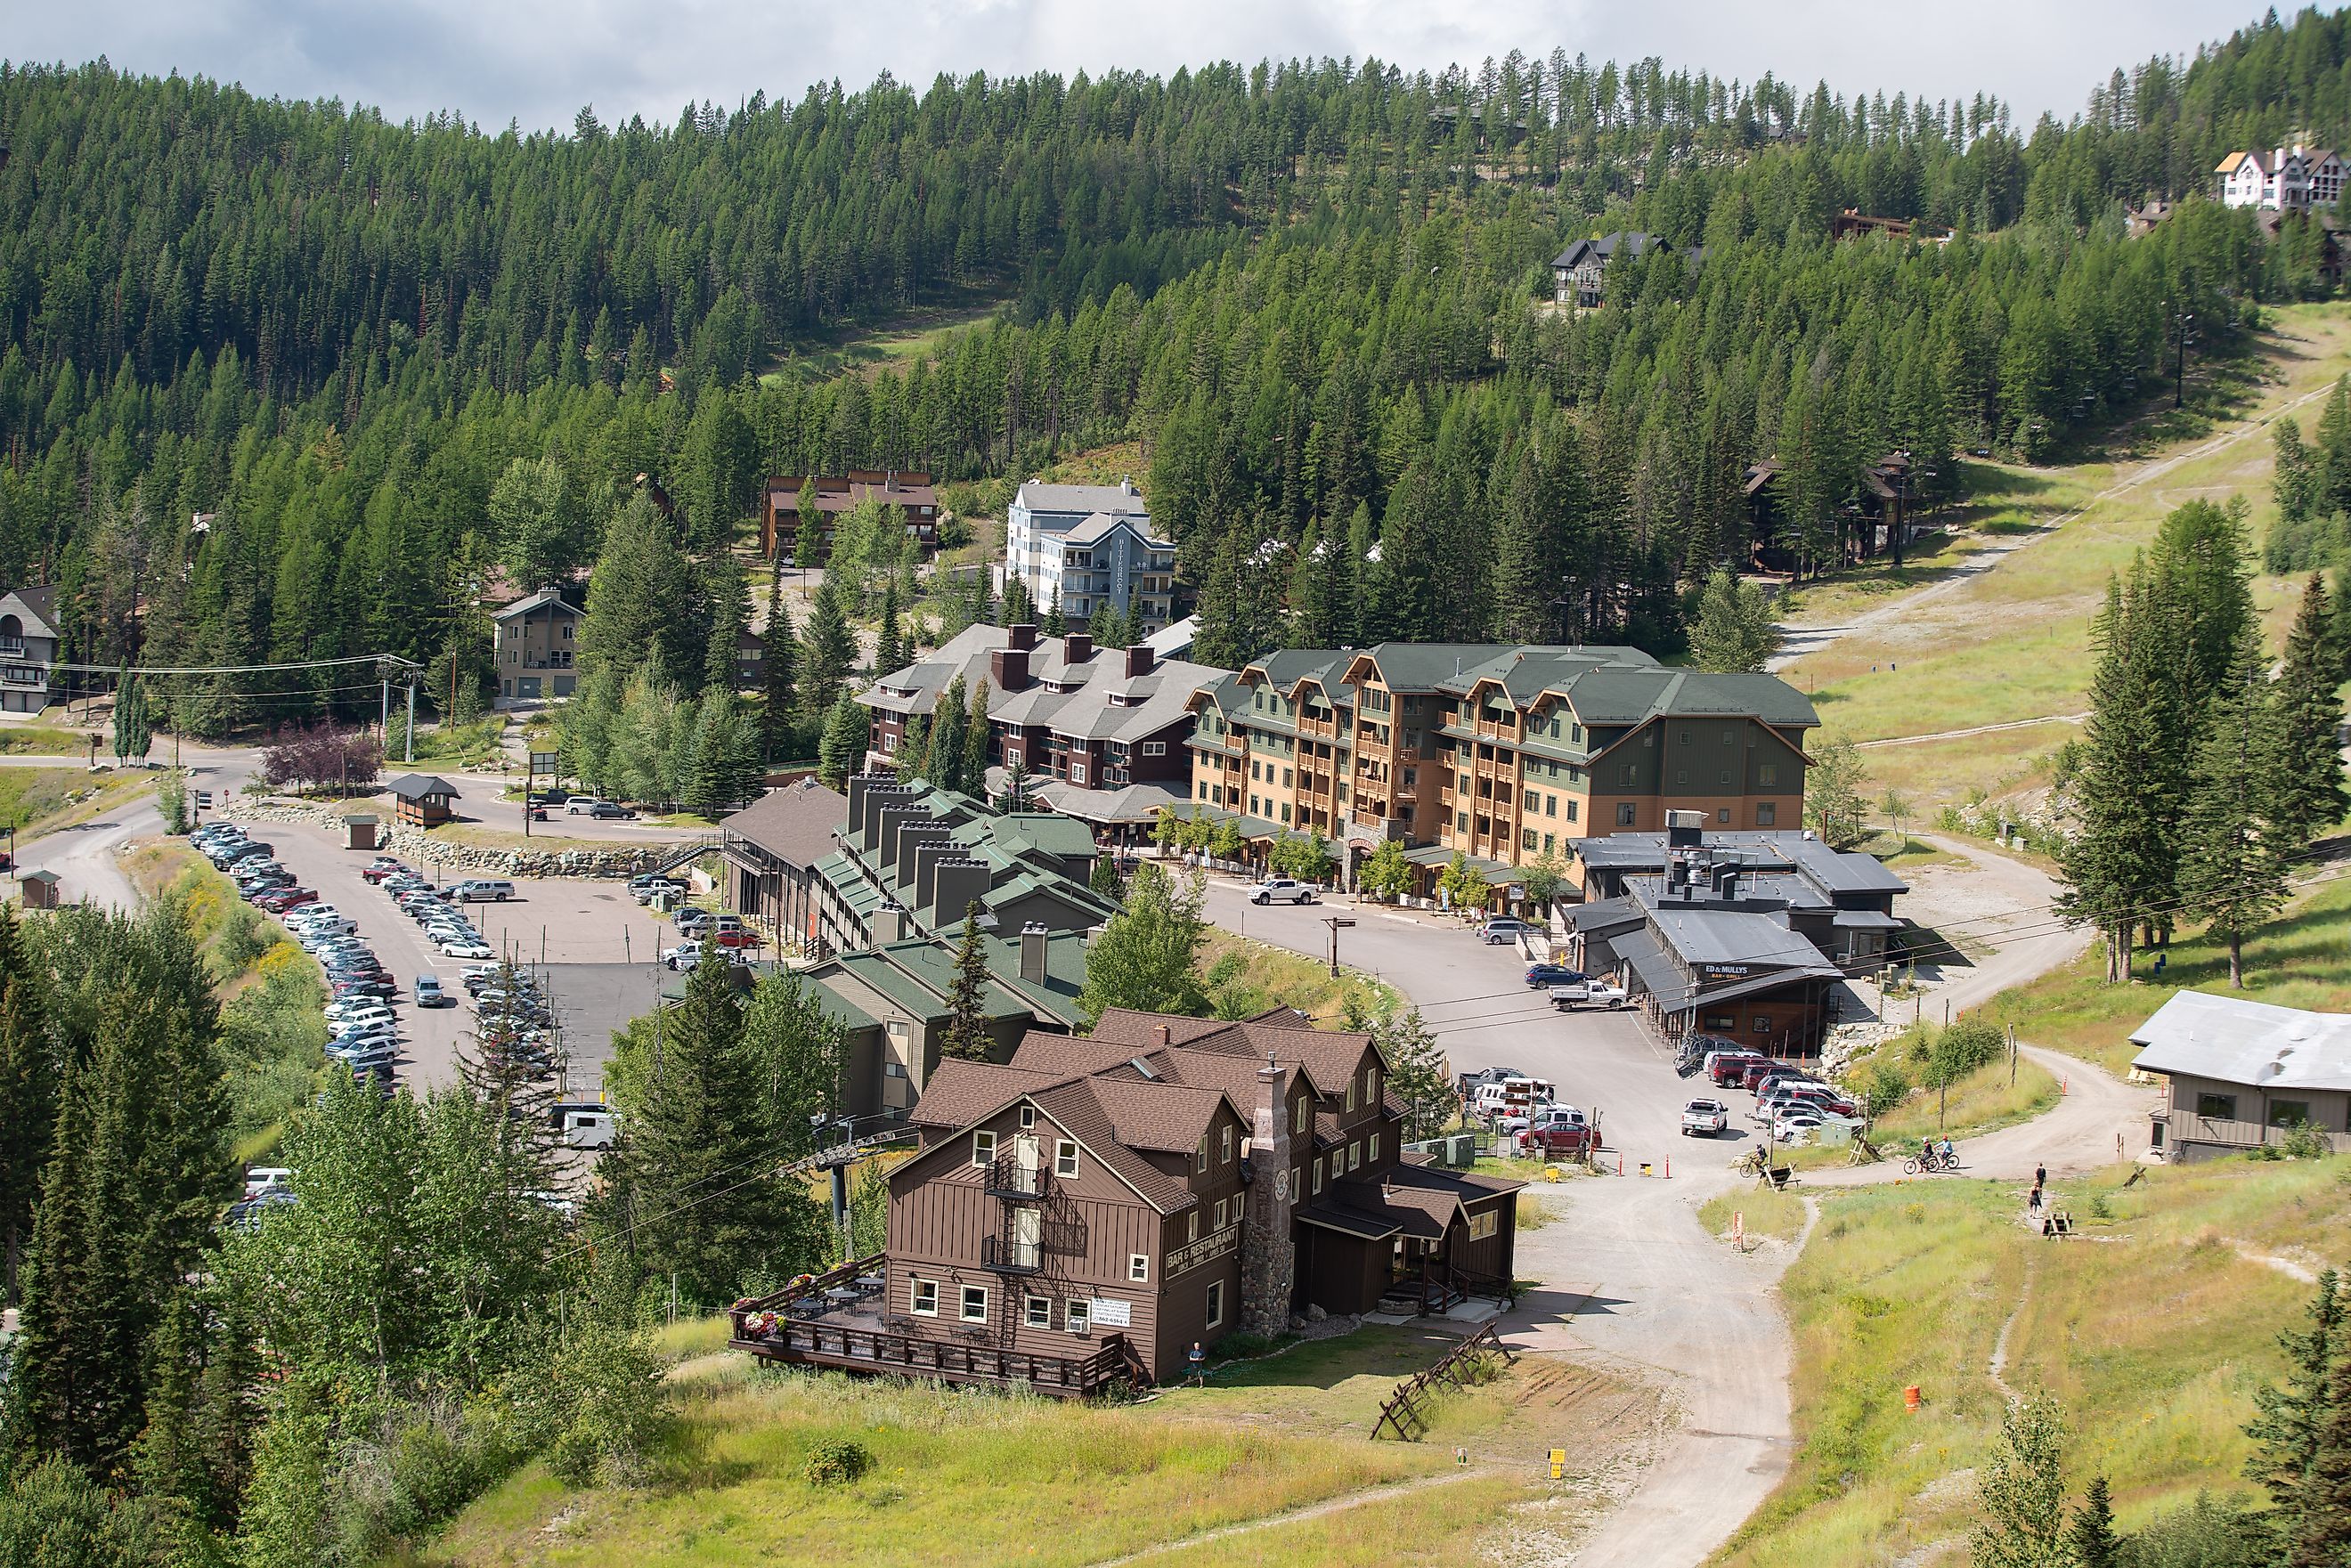 Whitefish Resort, MT / USA - August 19 2019: Mountain ski resort, aerial view during summer day.